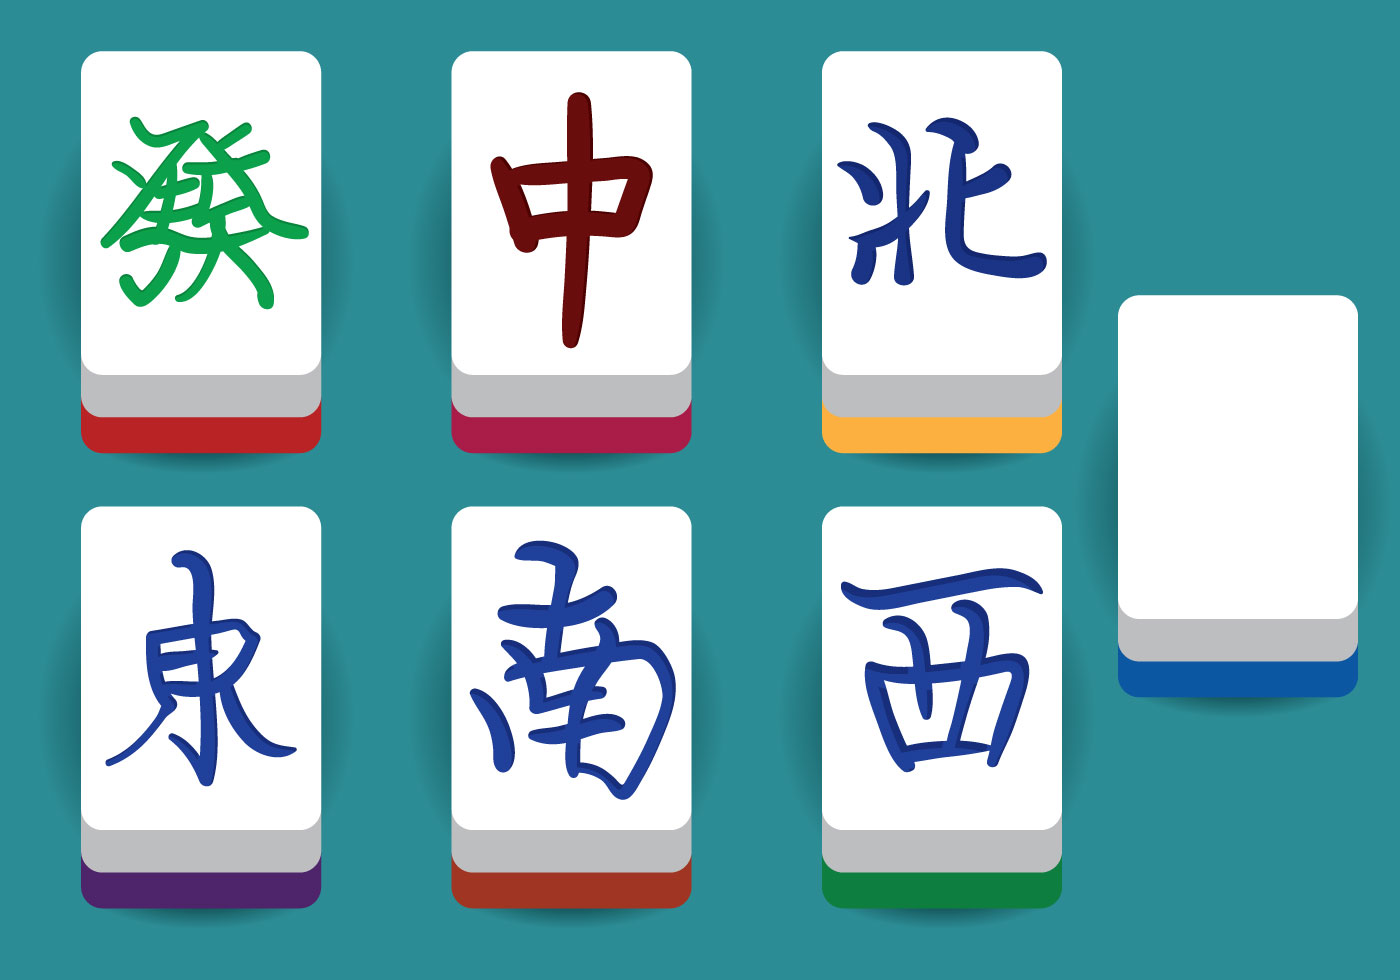 Download the Mahjong Vector Elements 104170